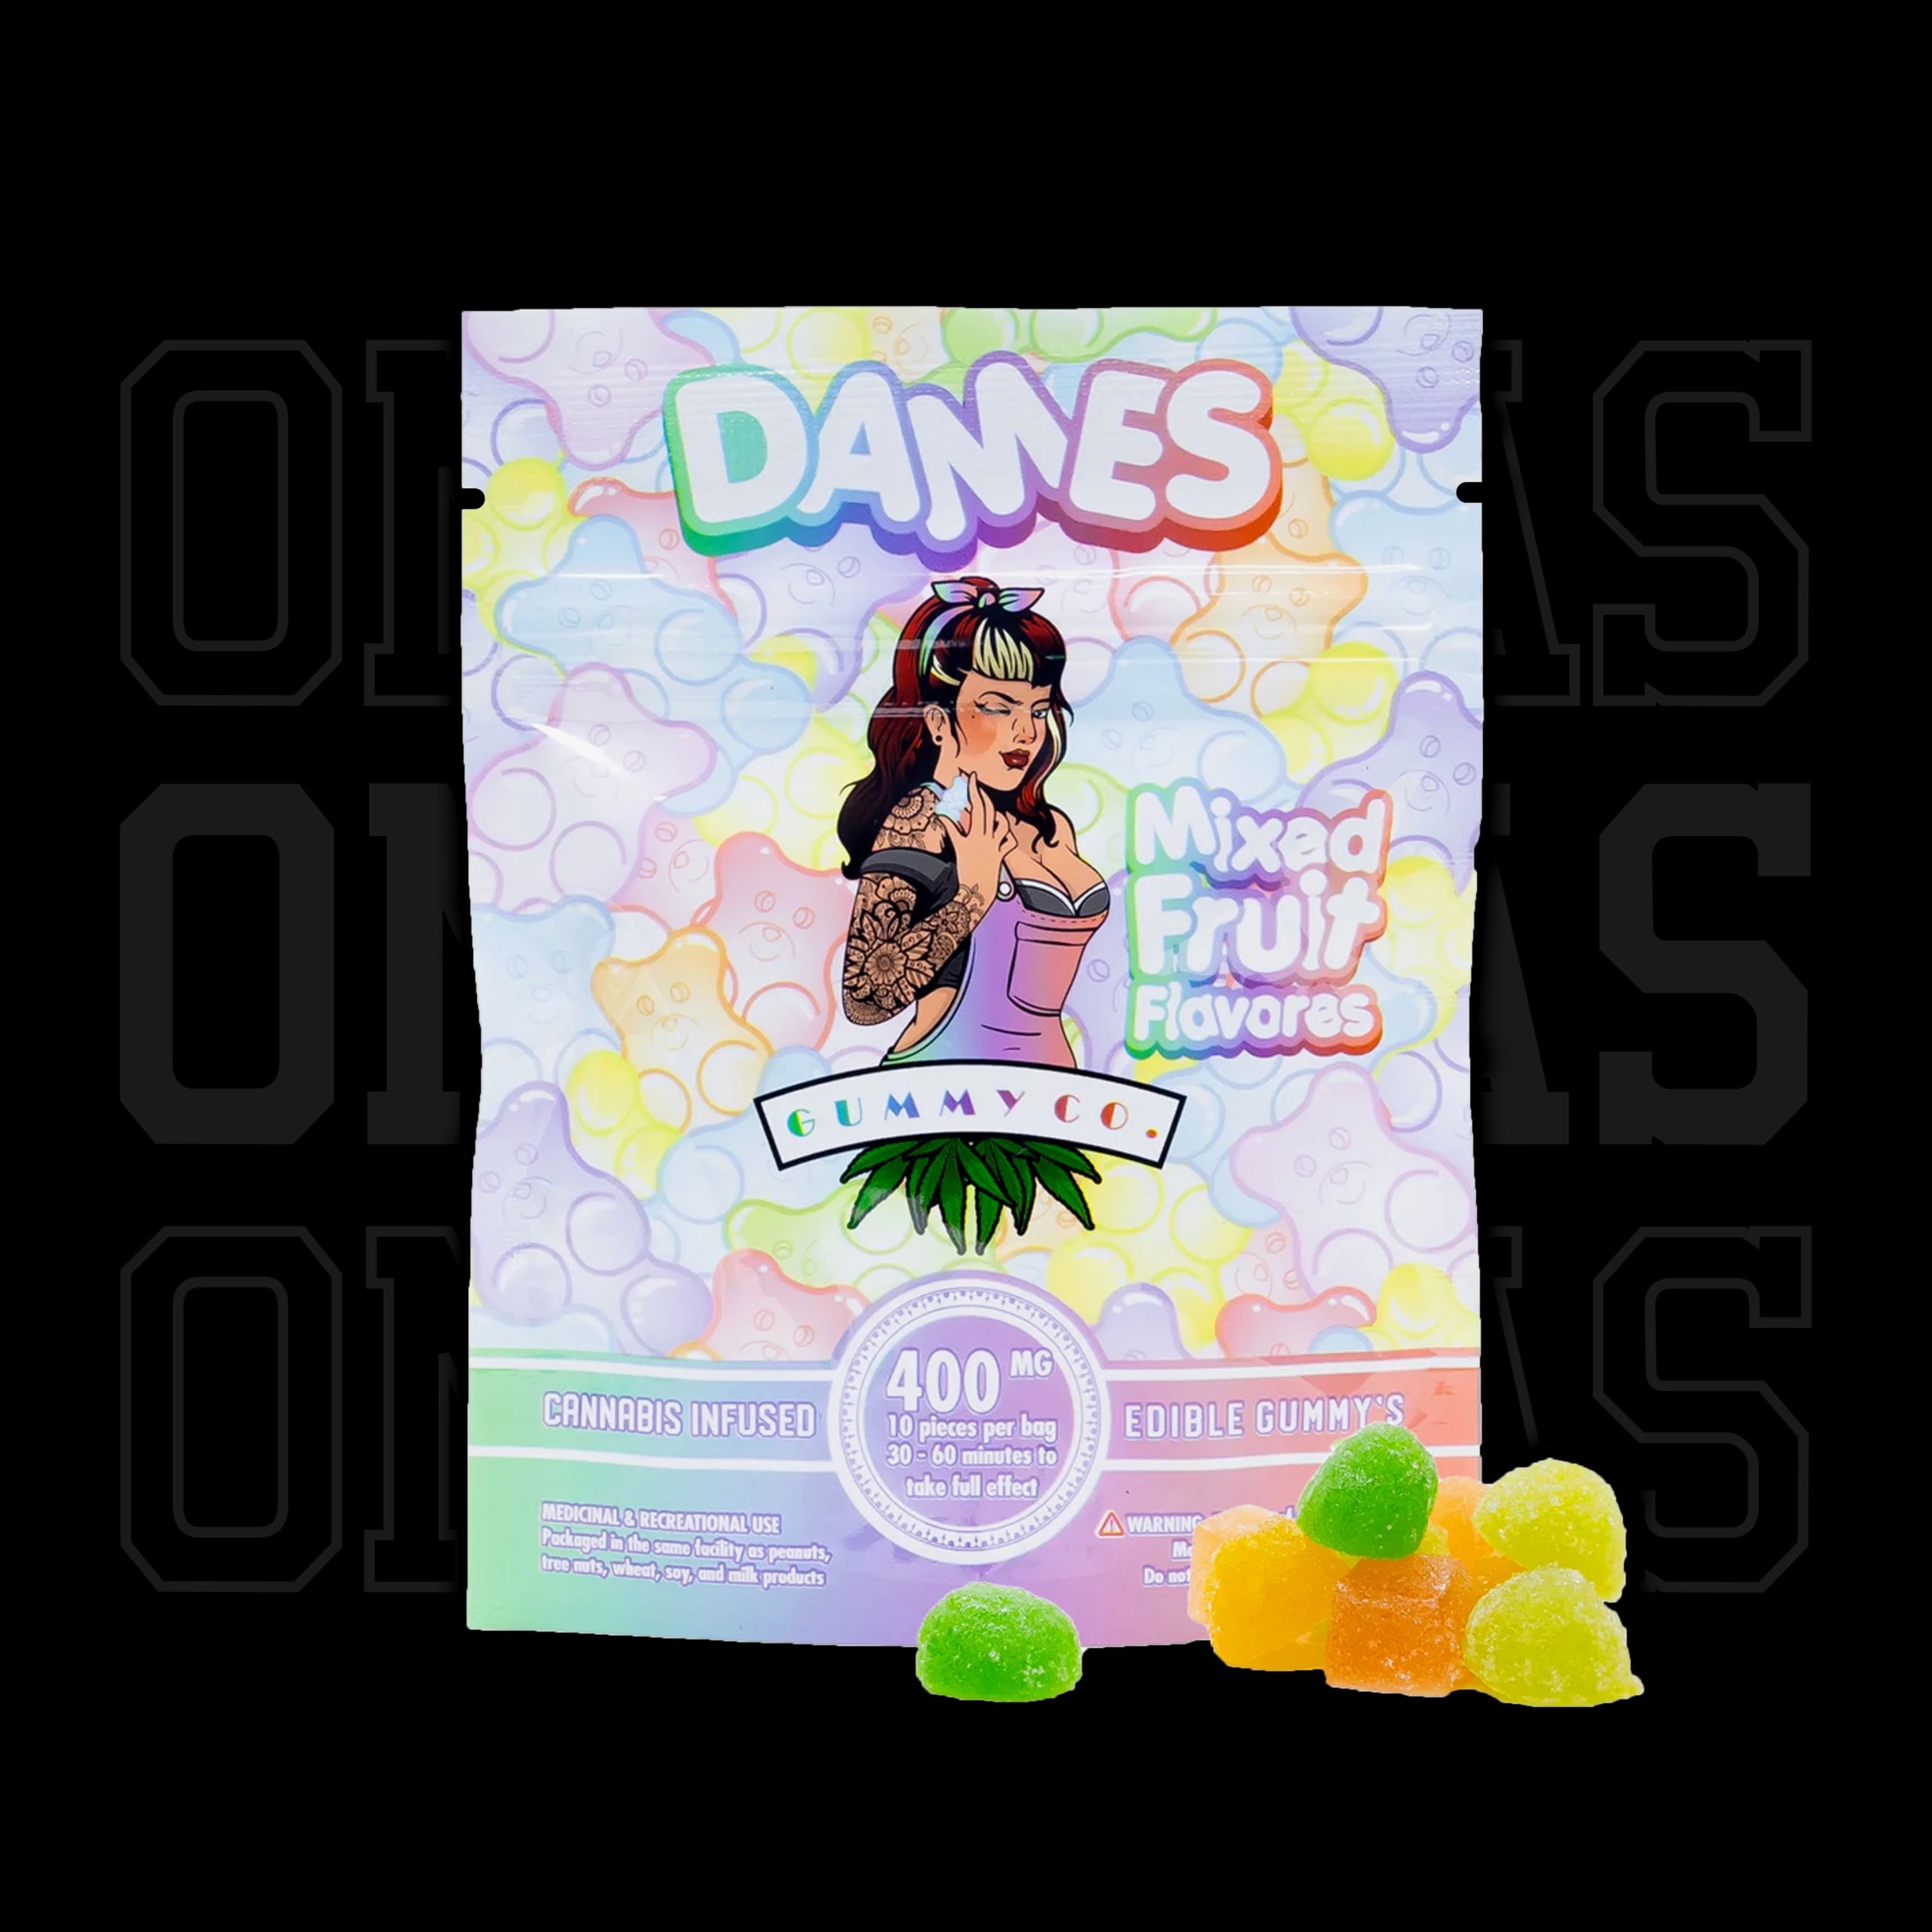 Dames-MixedFruit-01